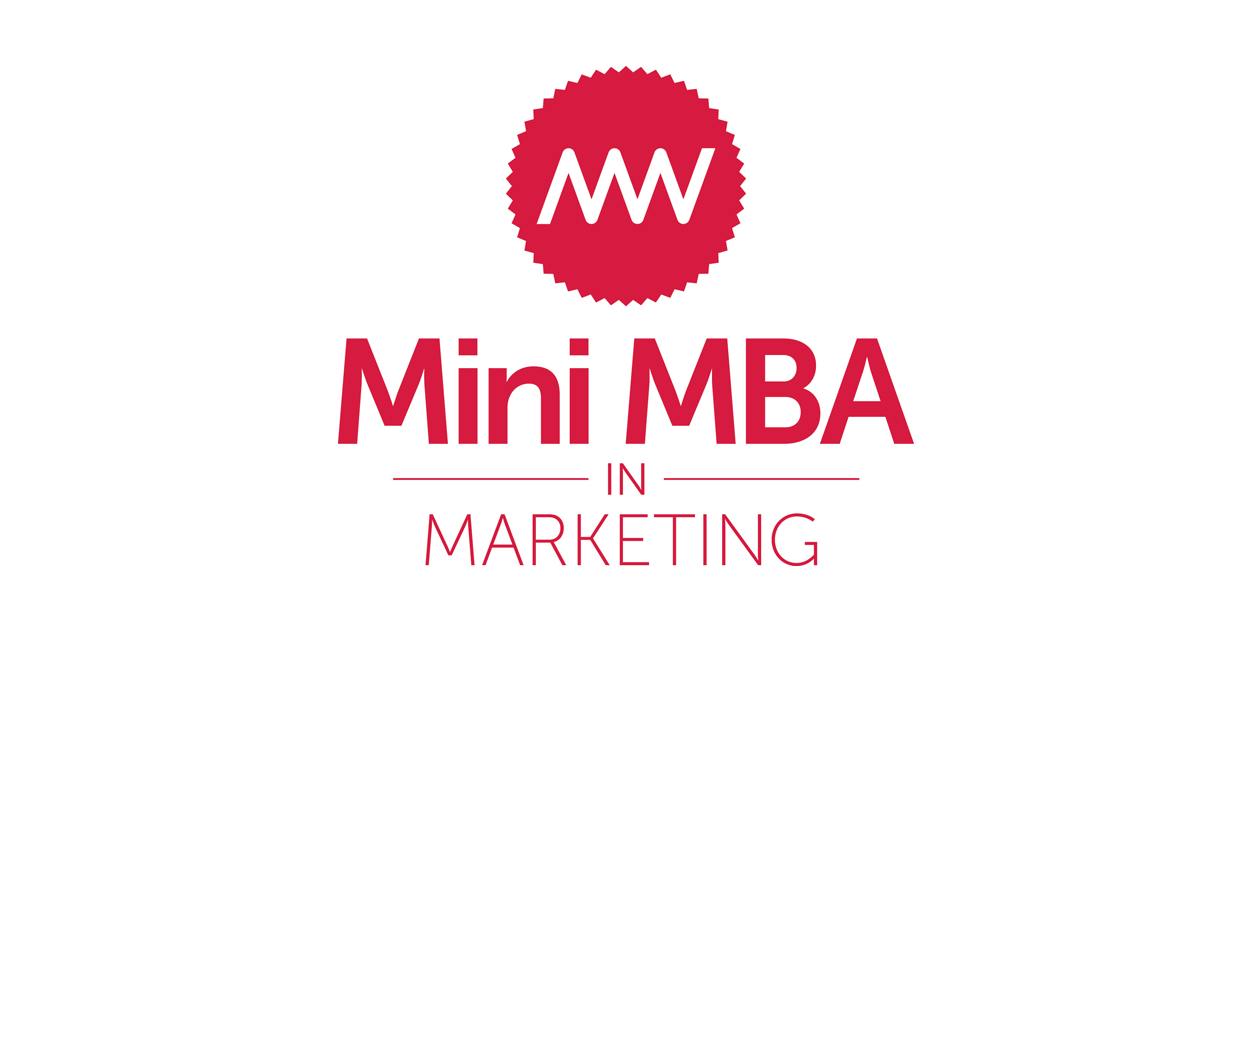 Мини MBA. Mini-MBA фон. Mini MBA logo. MBA Mini Мем. Marketing weekend